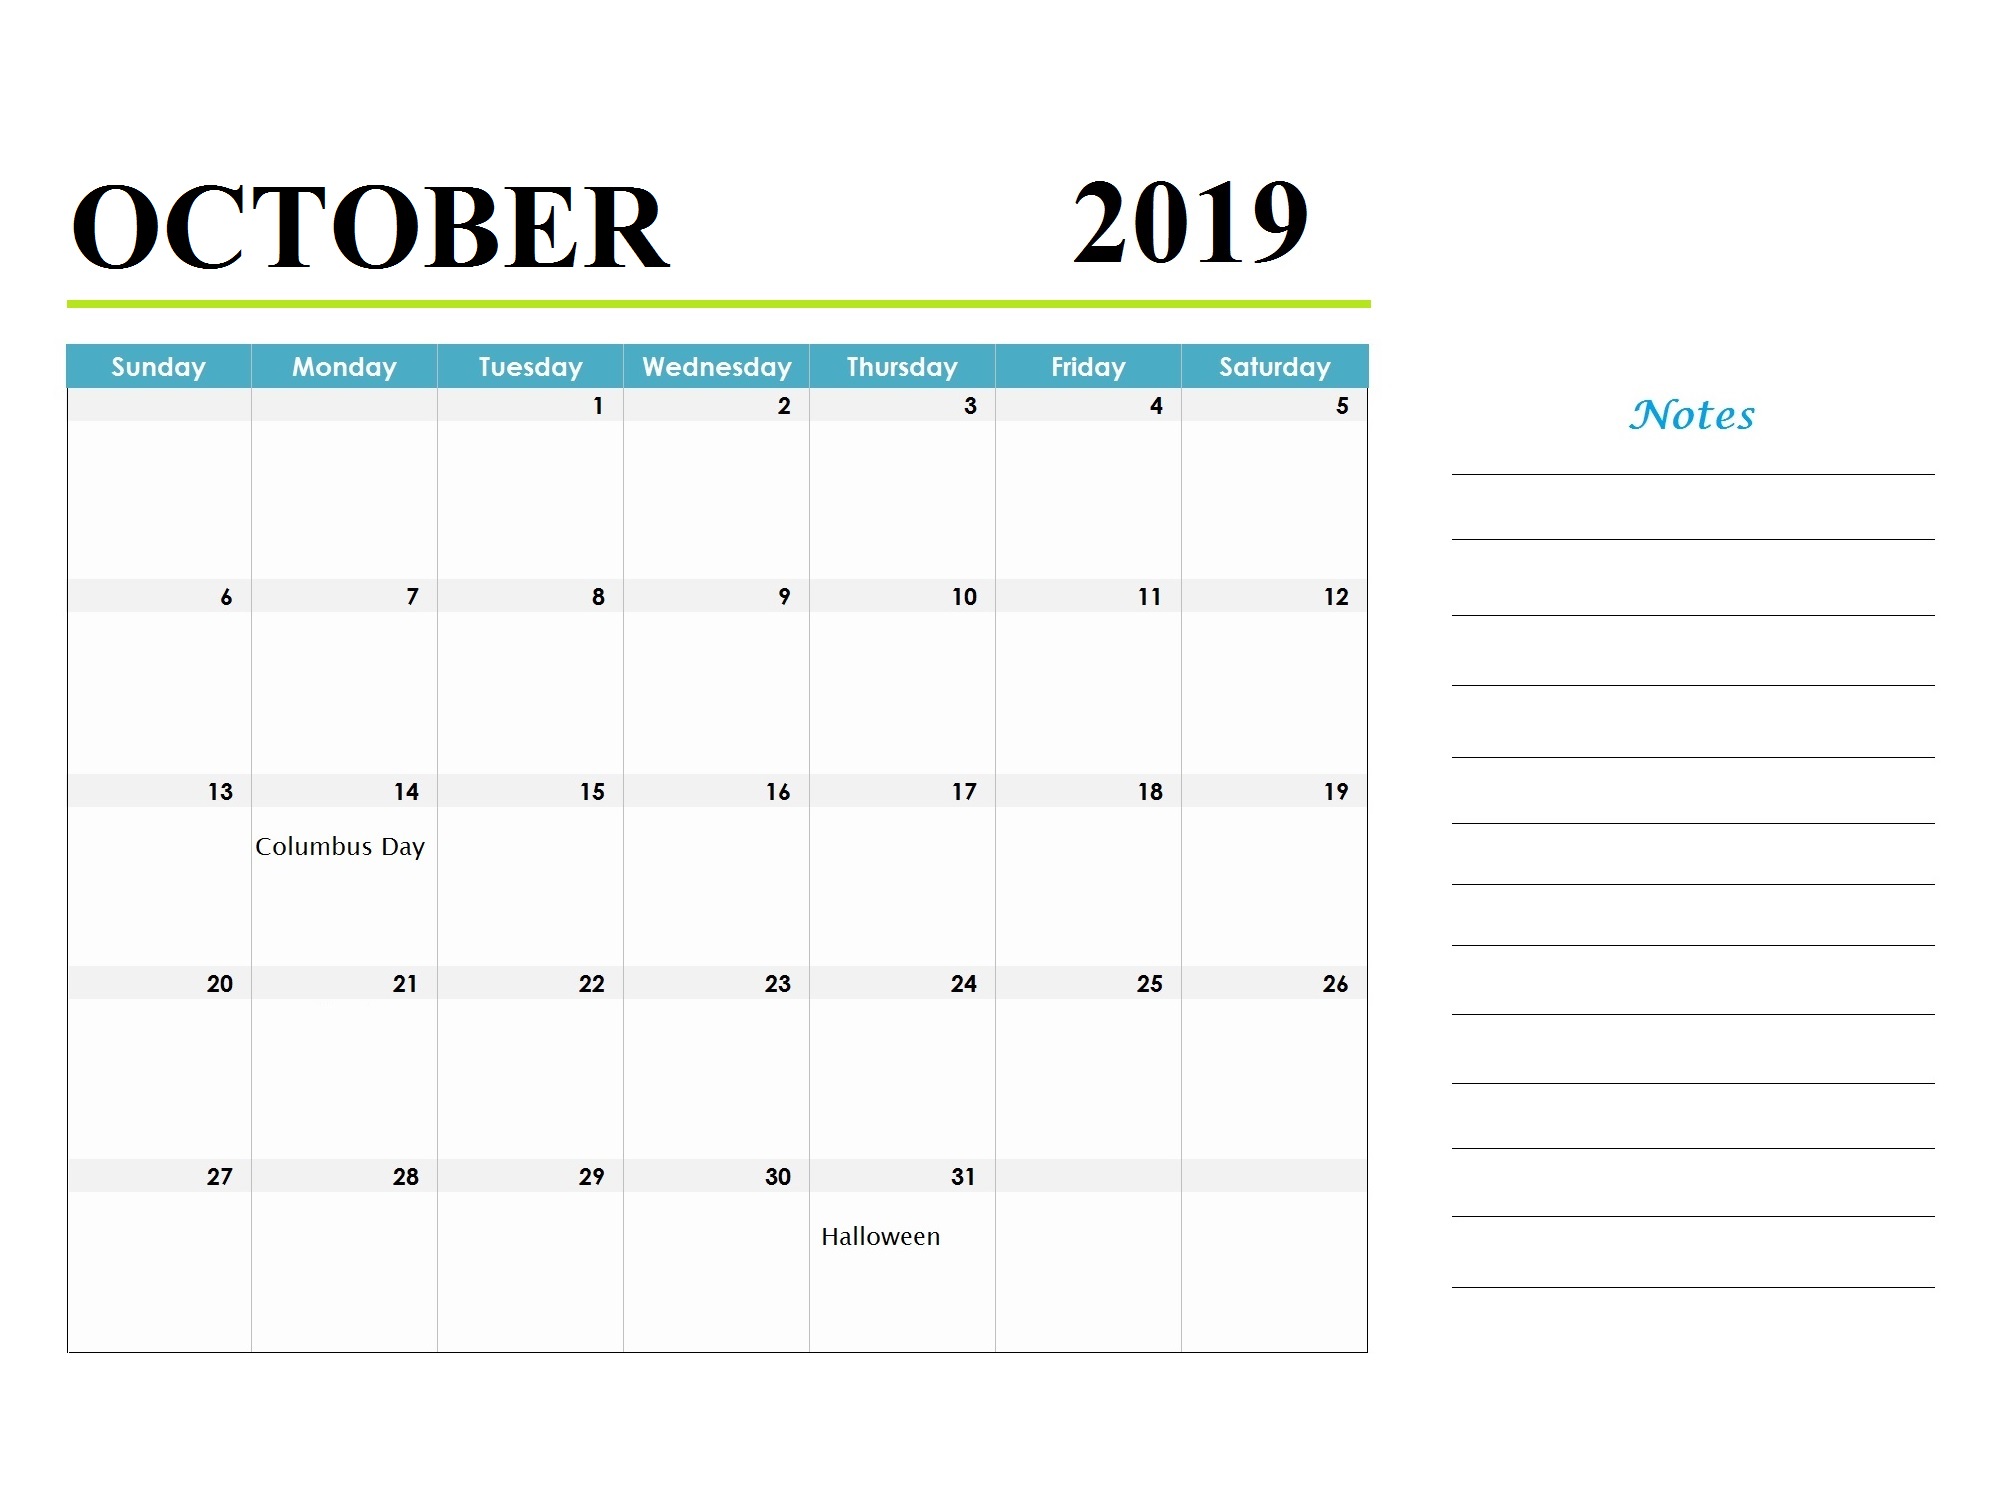 October 2019 Holidays Calendar Template